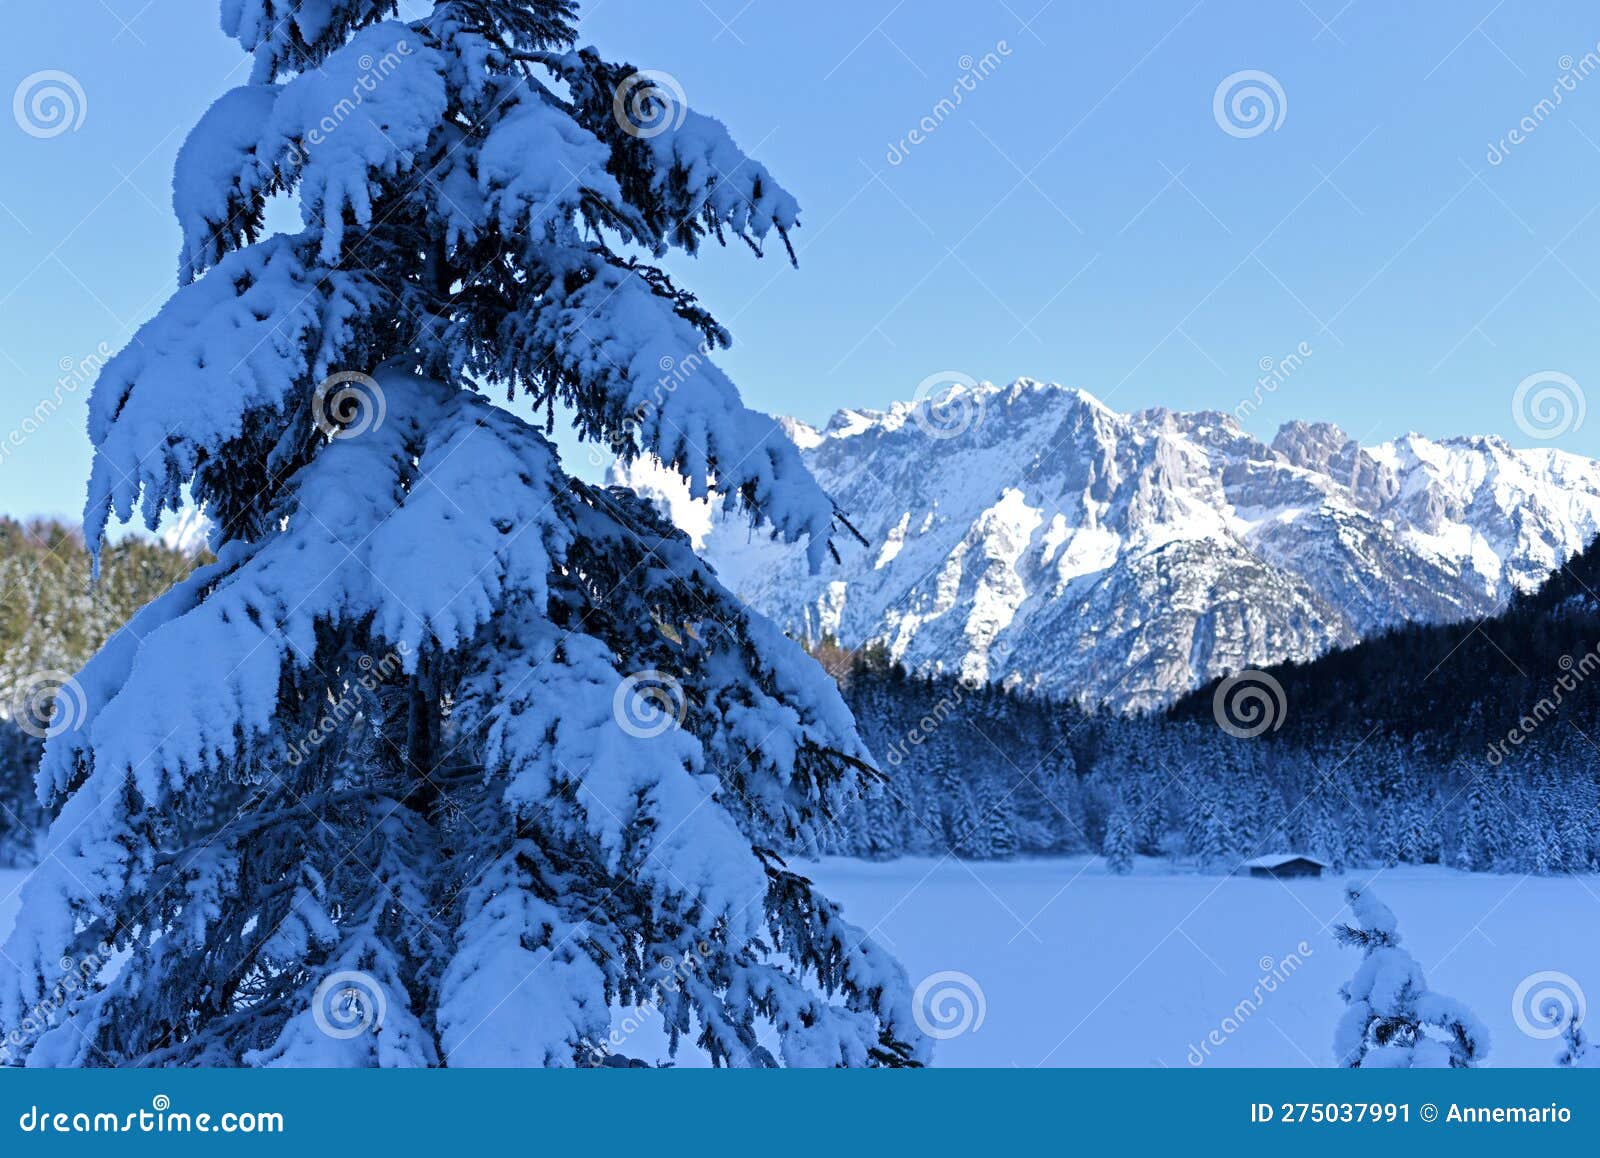 winter wonderland landscape by the lake ferchensee in bavaria, germany